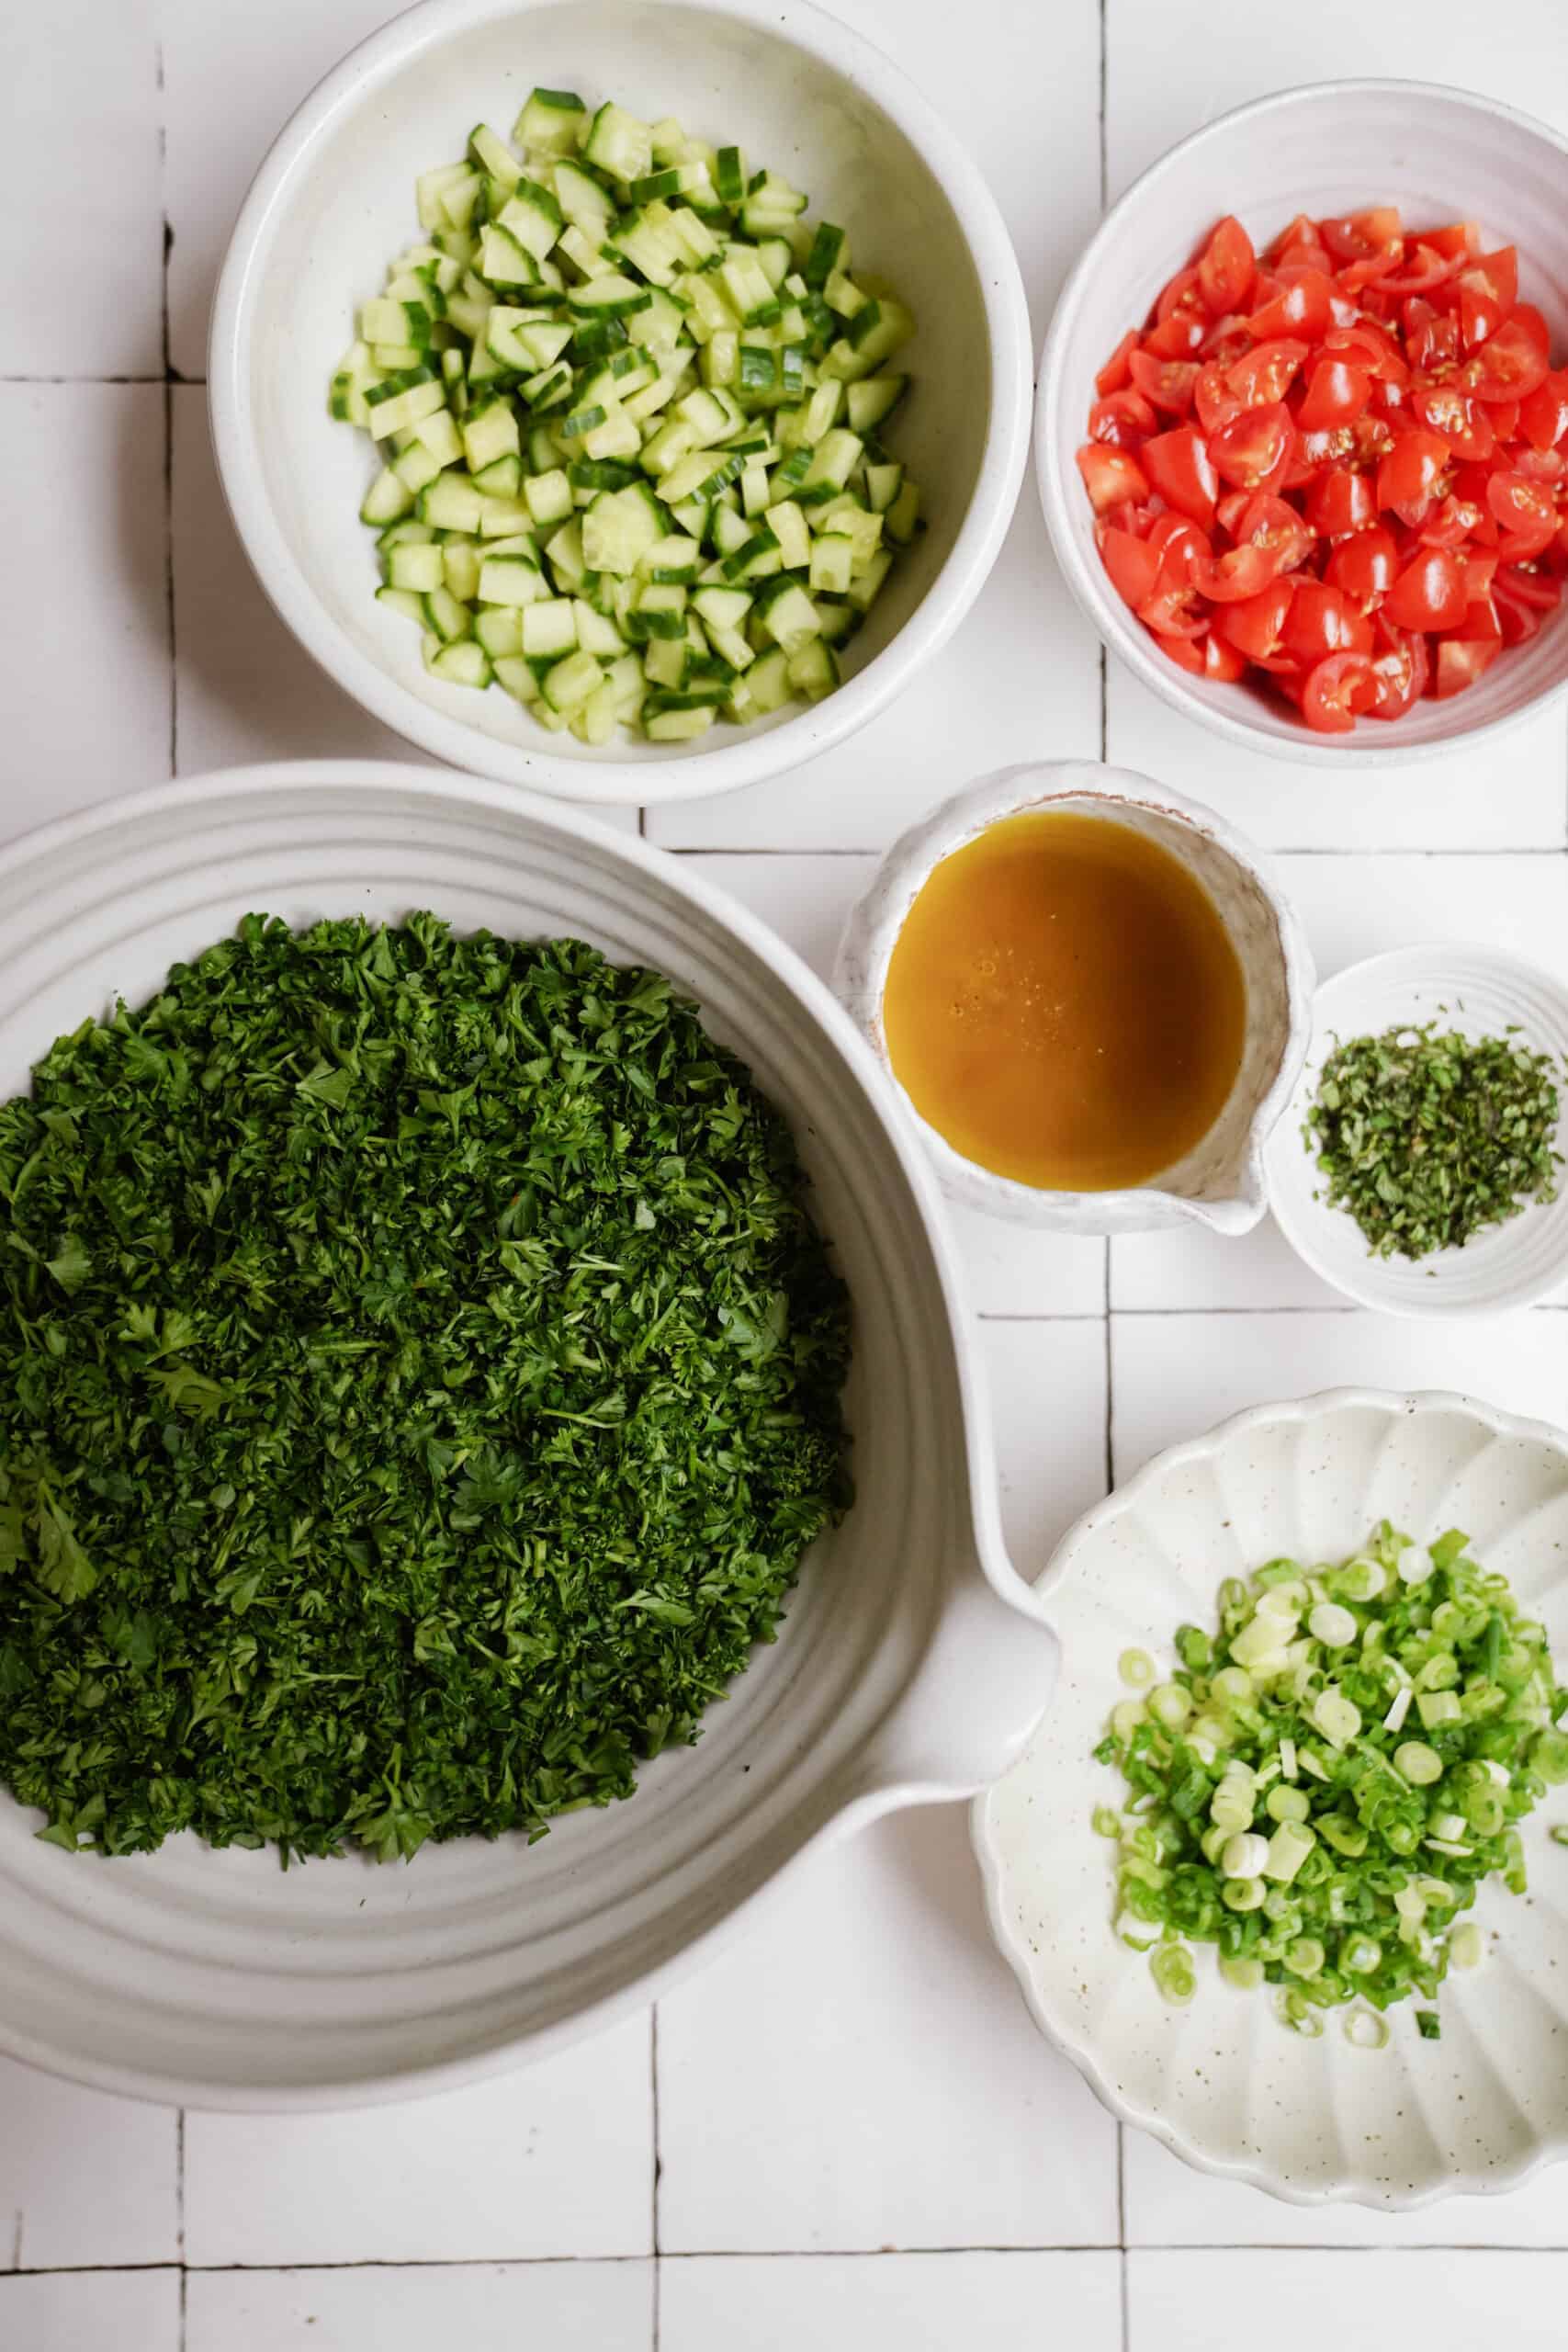 Ingredients for tabbouleh Salad